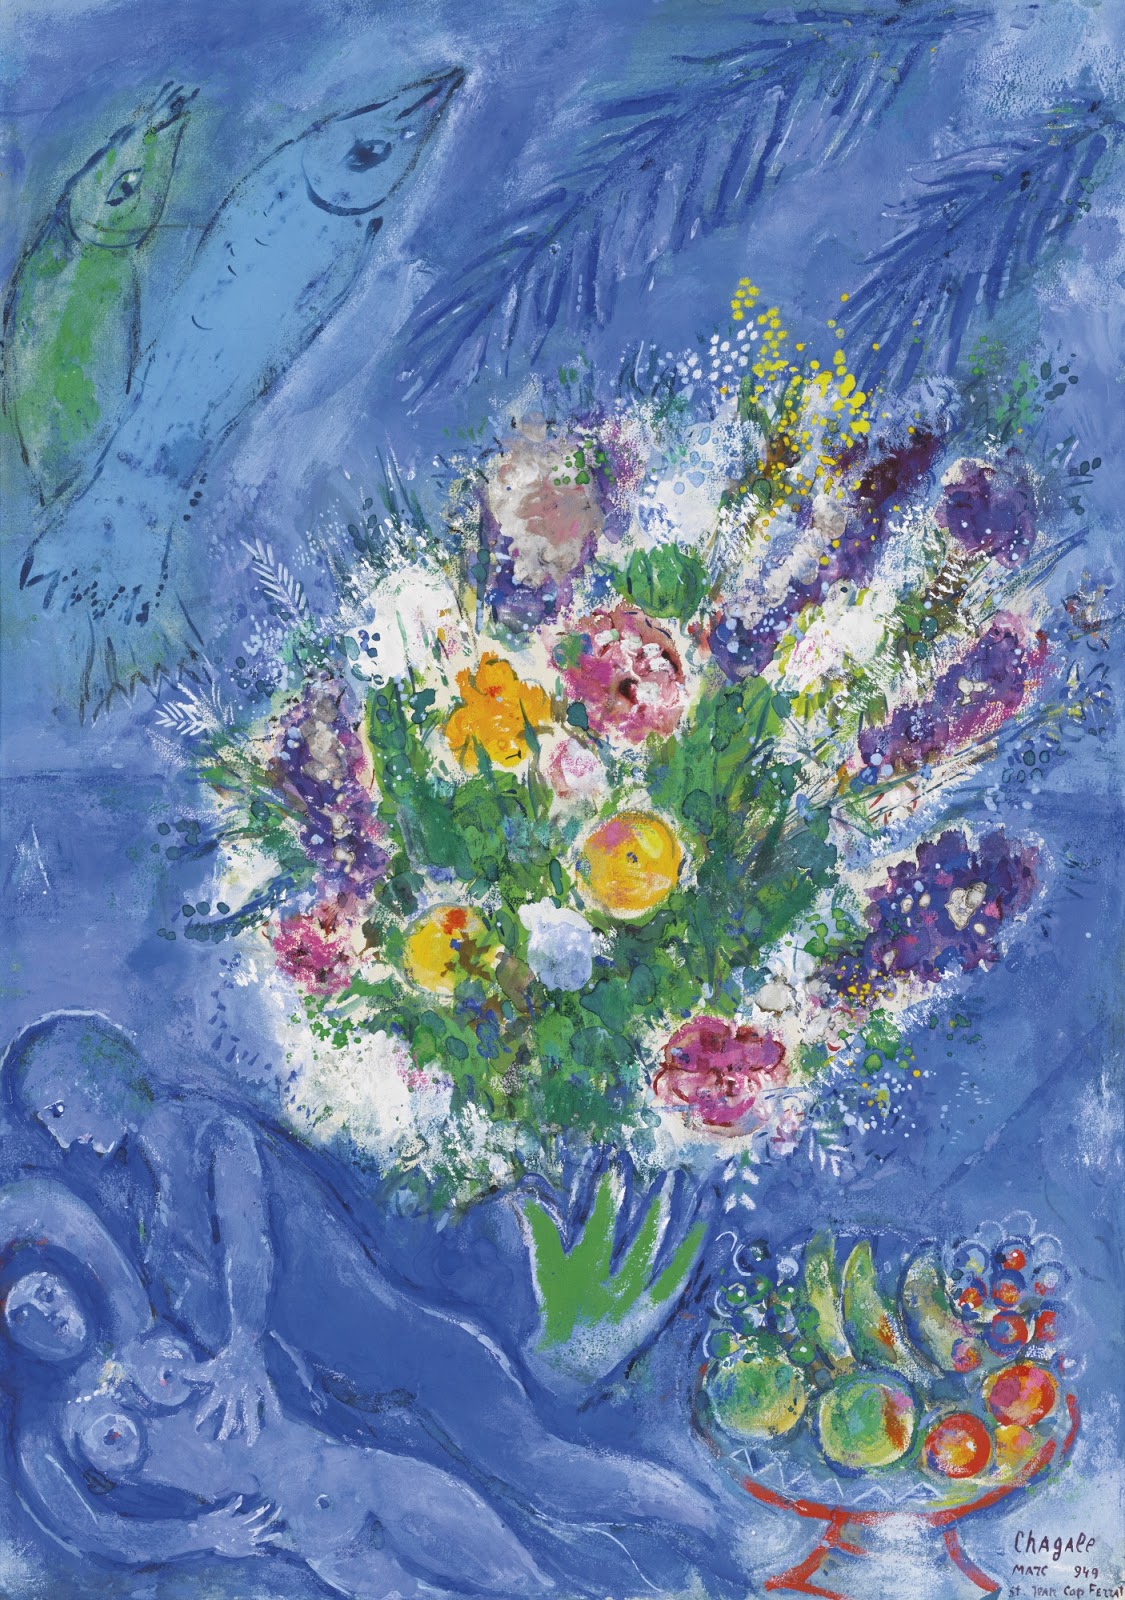 Marc+Chagall-1887-1985 (368).jpg